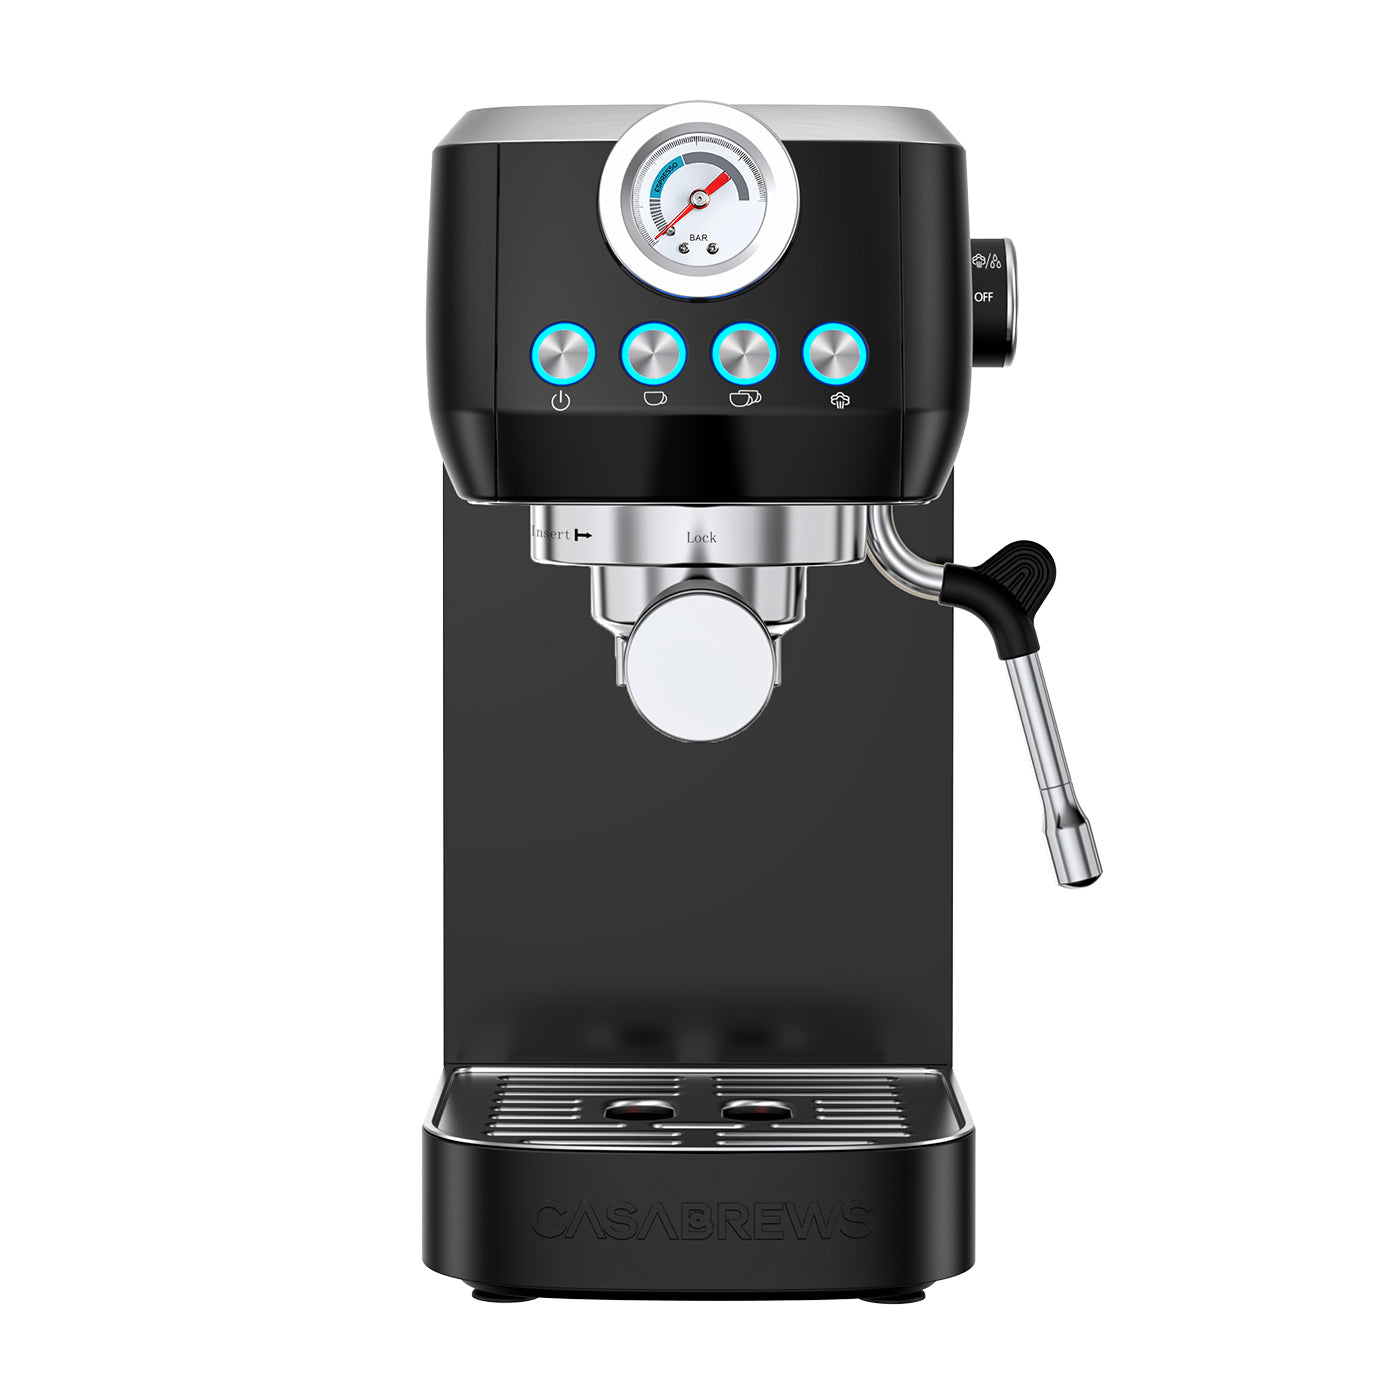 Casabrews 20 Bar Espresso Machine with Milk Frother System, Black Stainless Steel